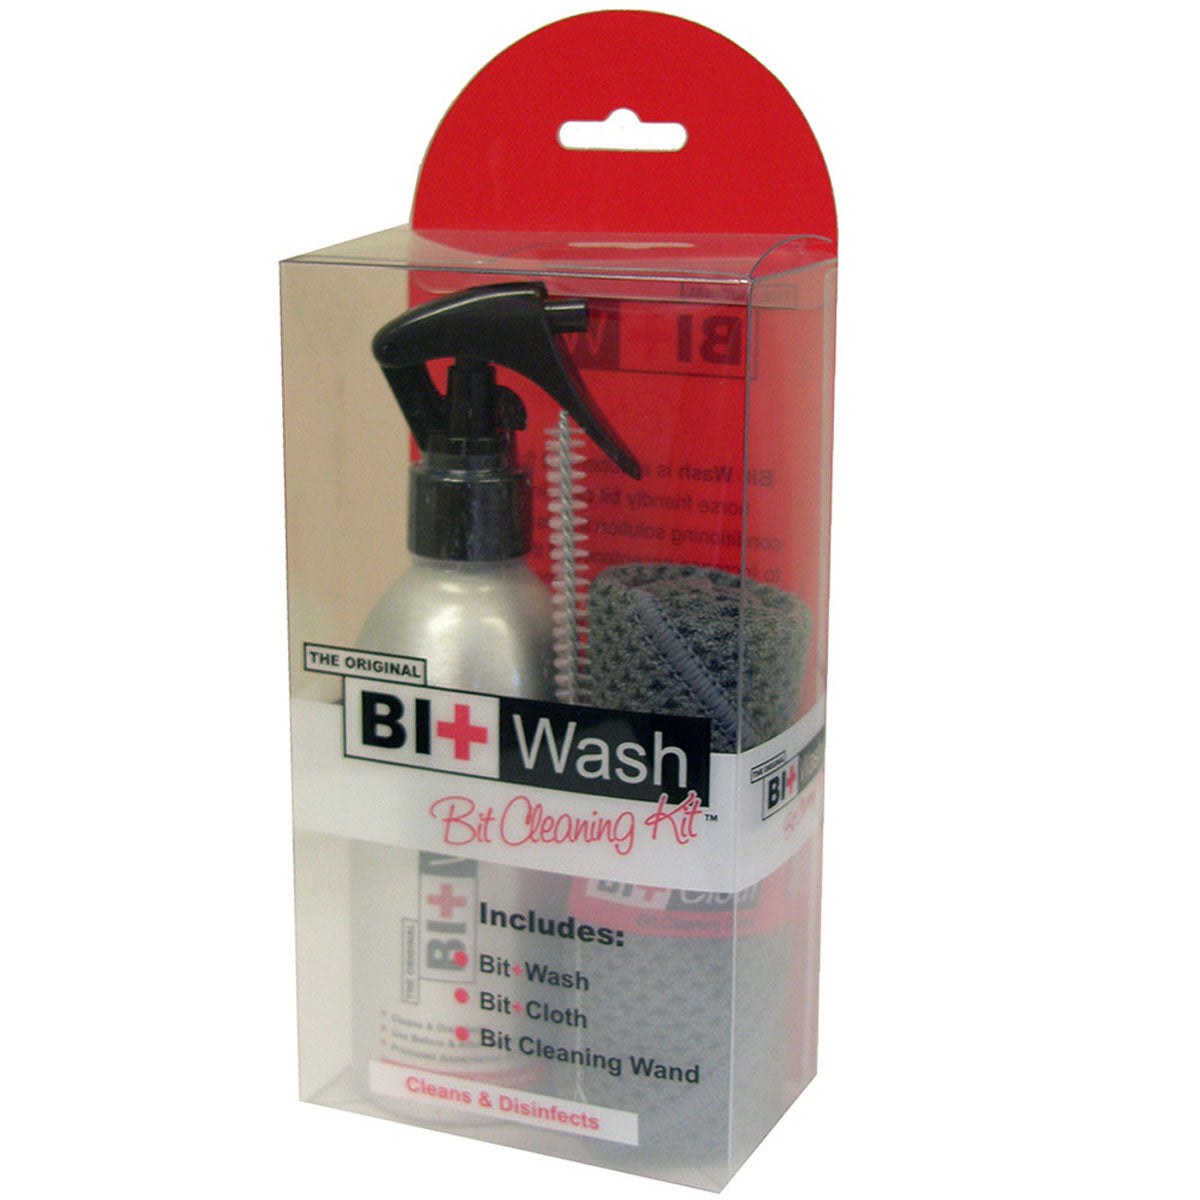 Bit+Wash Bit Cleaning Kit